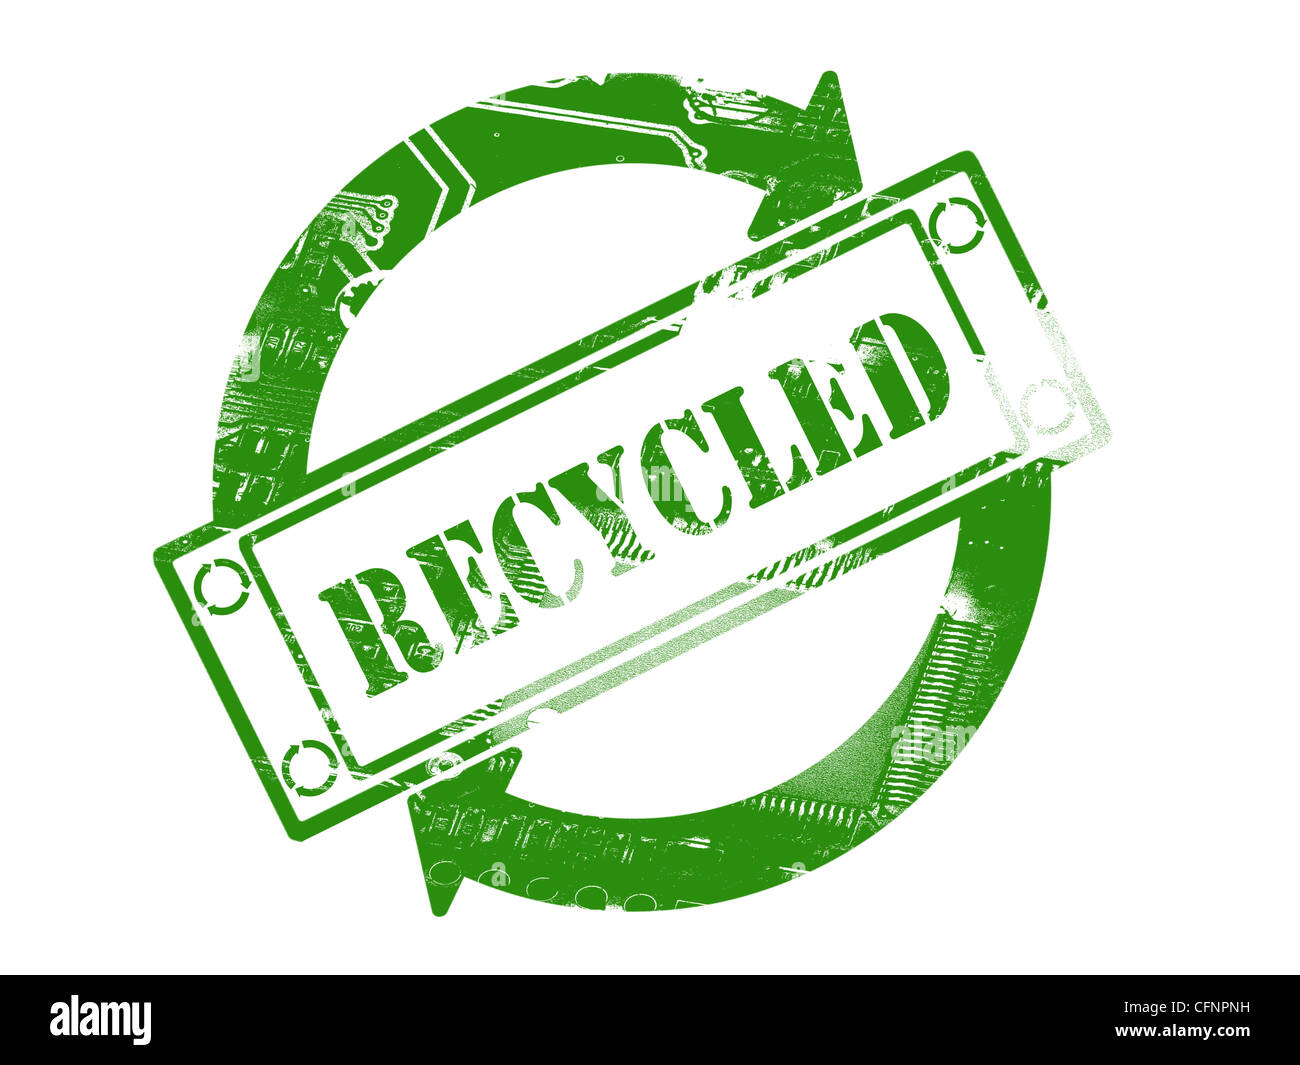 Recycling-grünen Stempel Drucken mit Grunge-Effekt - Recycling-Konzept Stockfoto